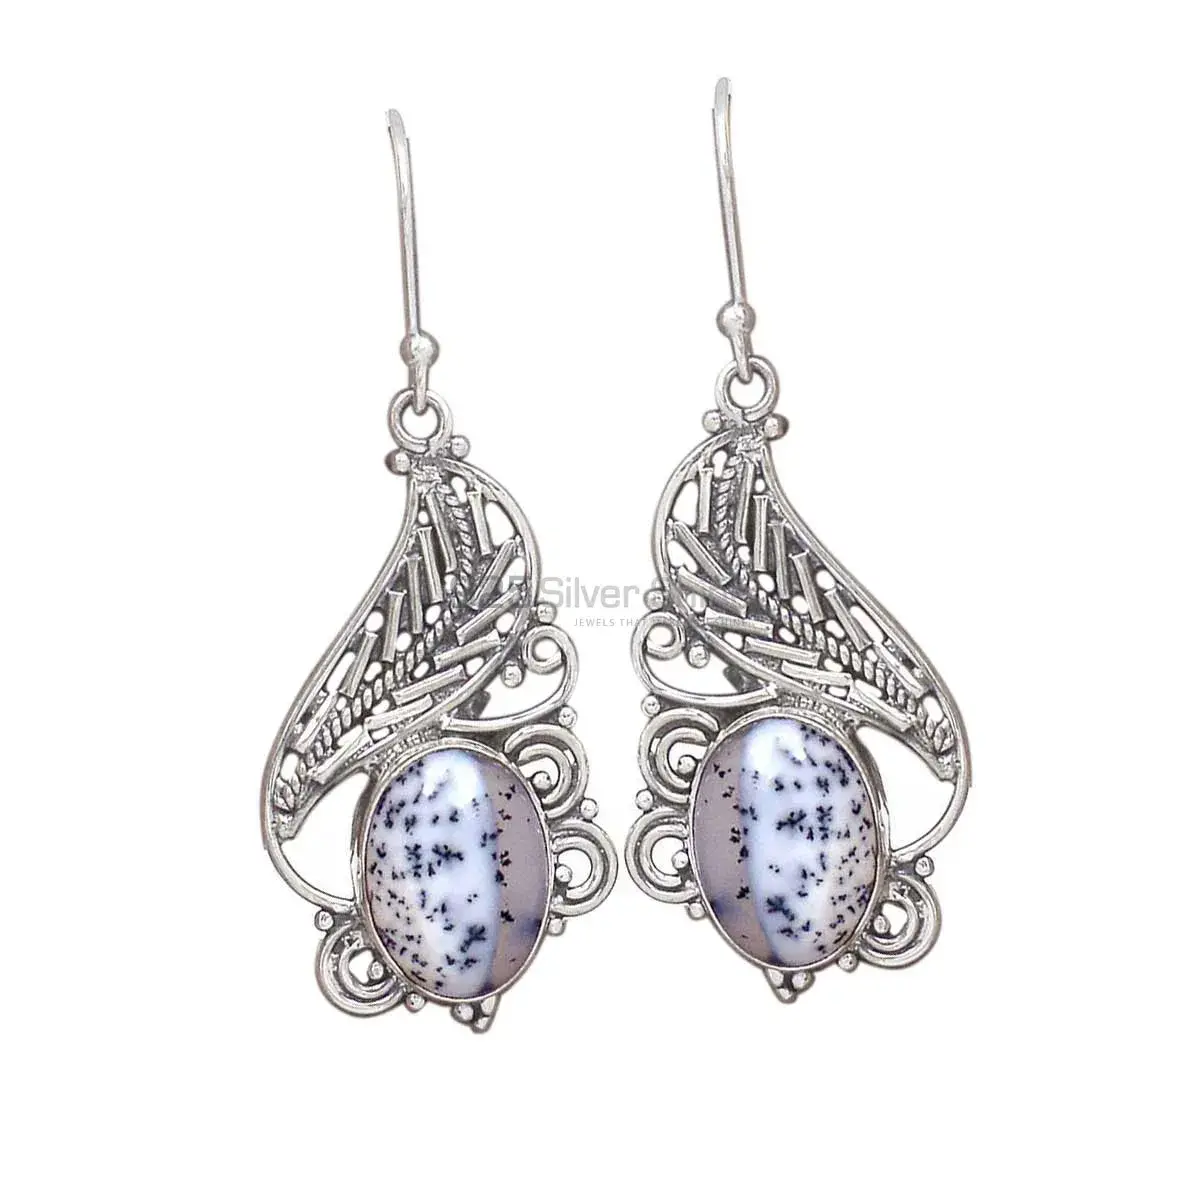 Affordable 925 Sterling Silver Handmade Earrings Suppliers In Dendritic Opal Gemstone Jewelry 925SE2957